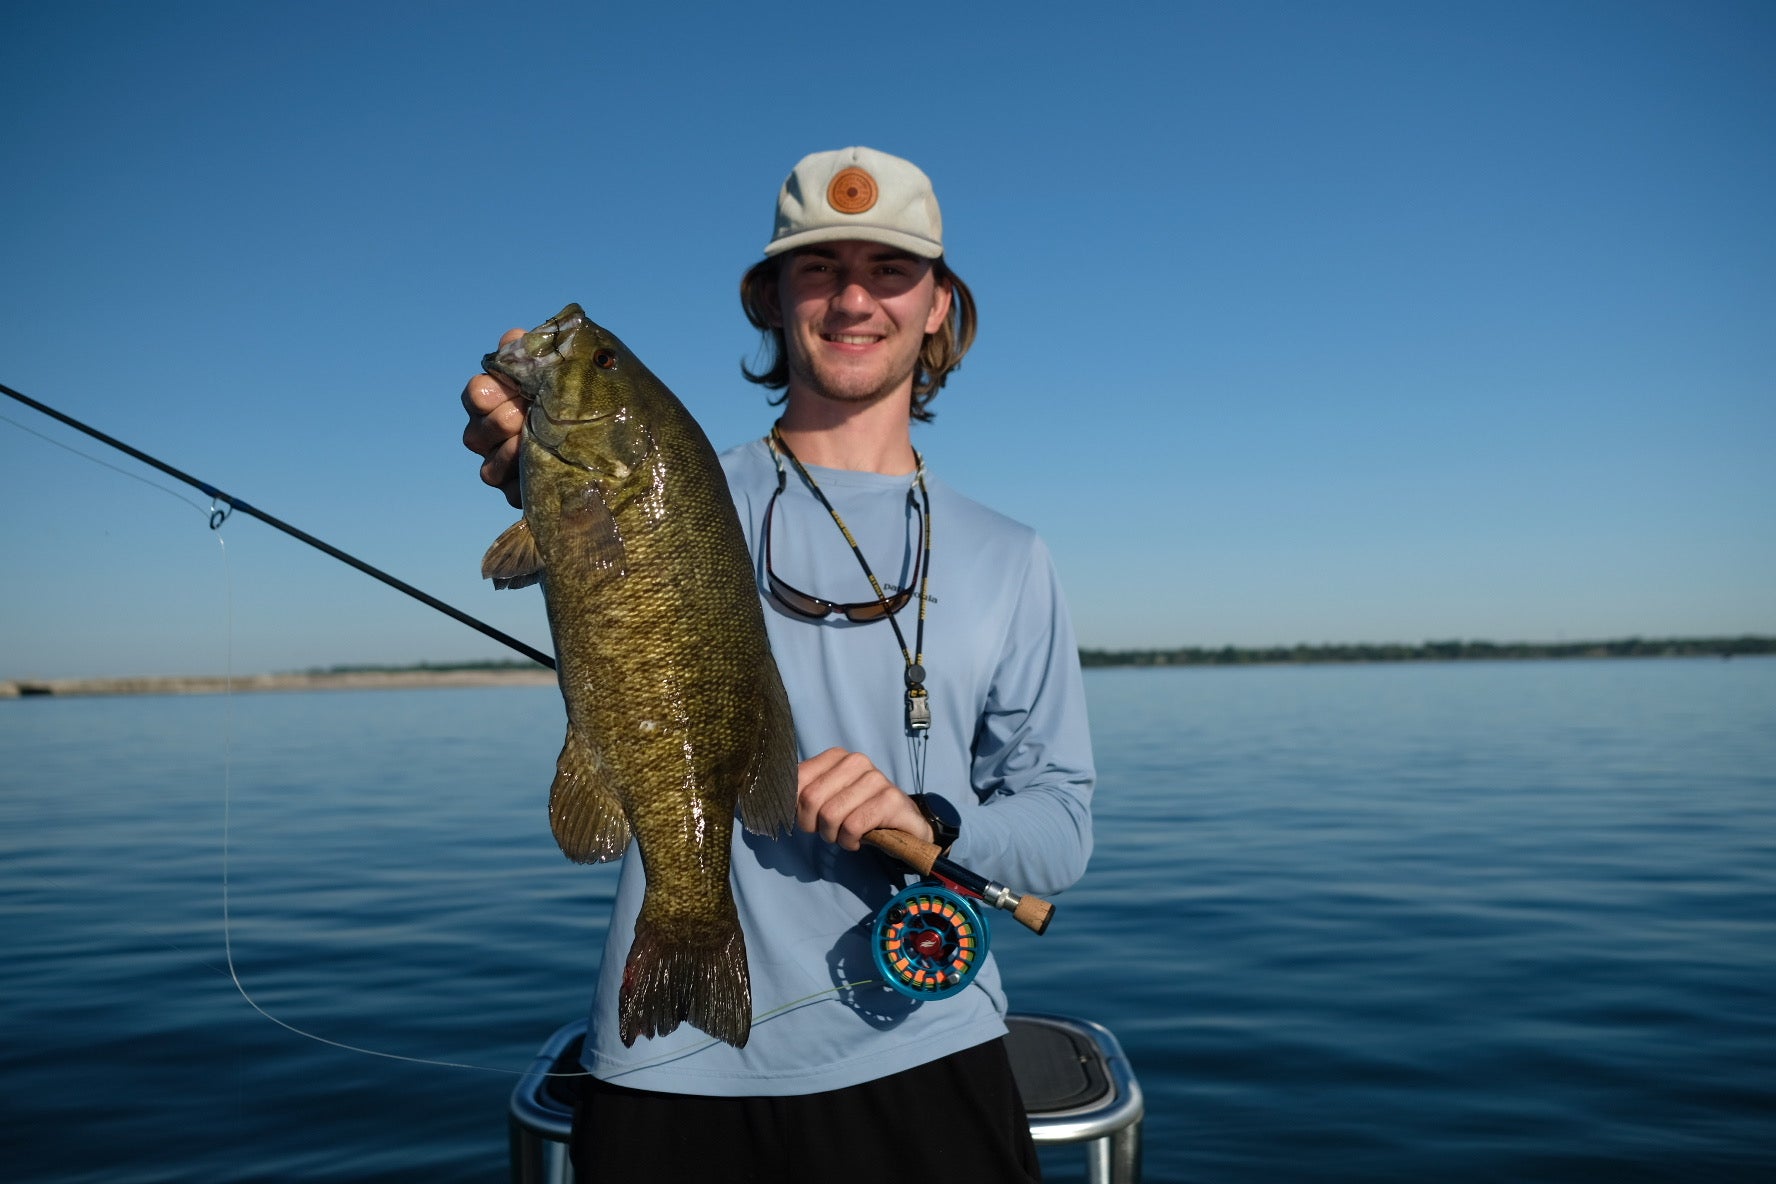 angler holding smallmouth bass